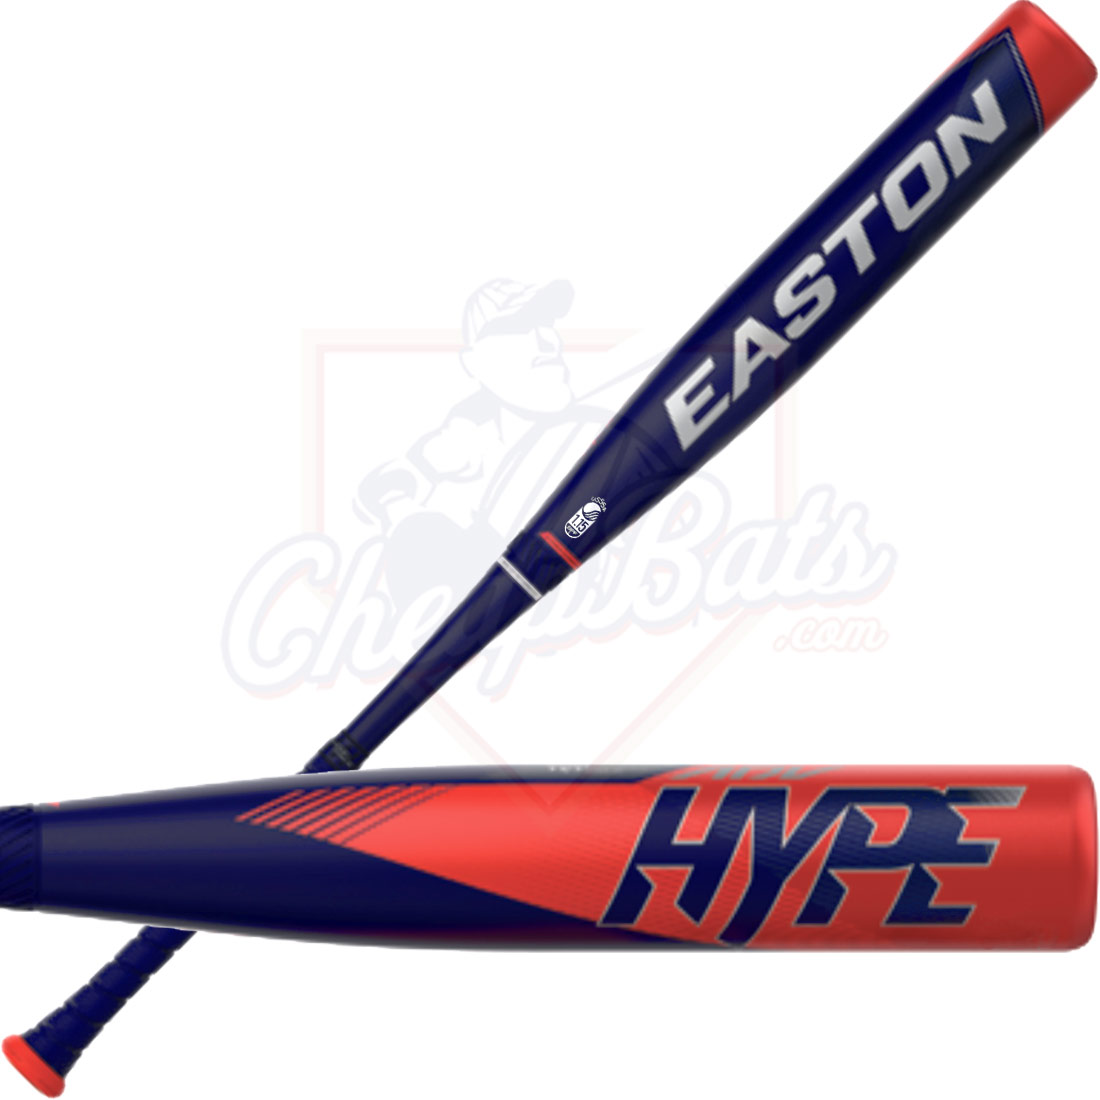 2022 Easton ADV Hype Youth USSSA Baseball Bat -5oz SL22HYP58